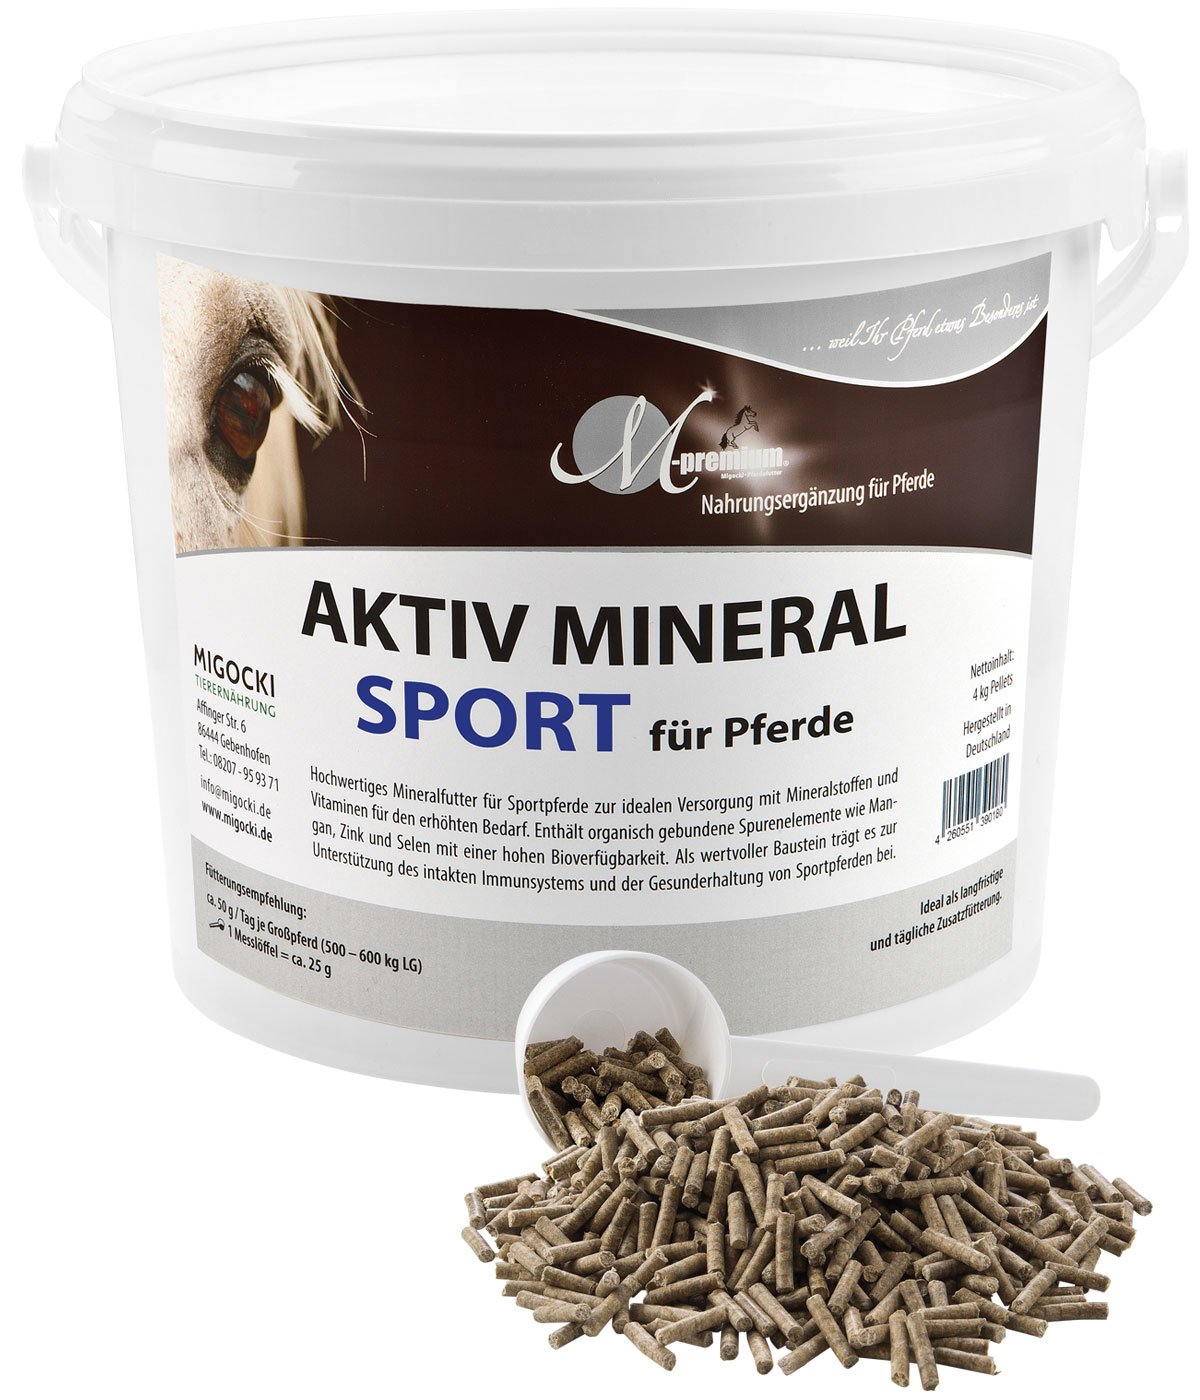 Produkt Aktiv Mineral Sport mit Mangan pelletiert